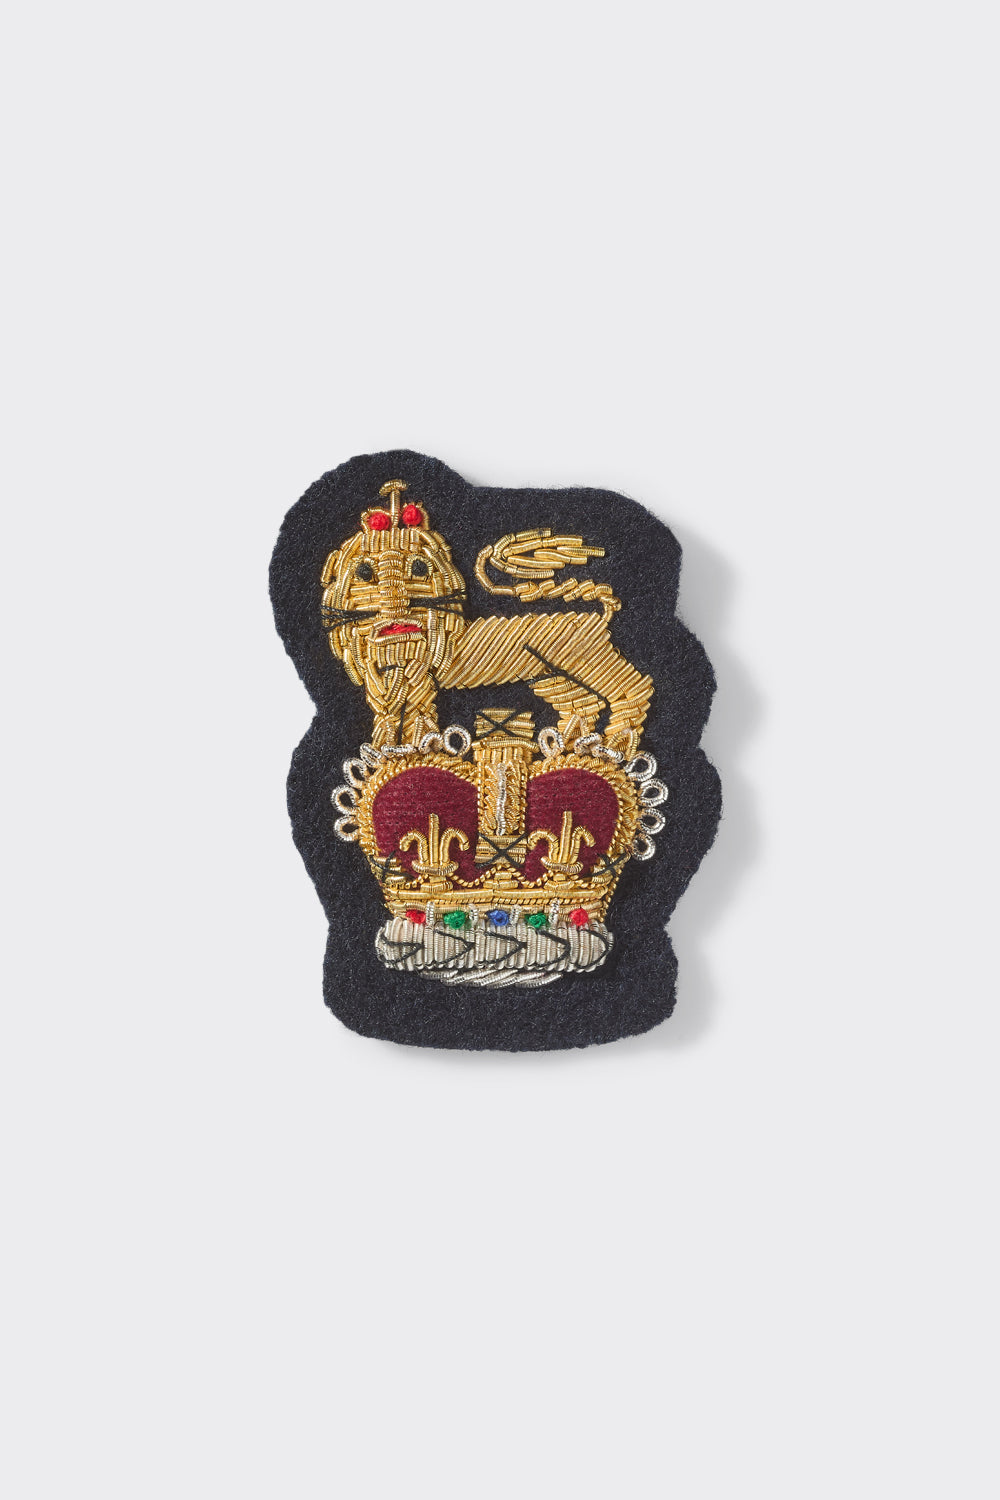 British Army Staff Colonels Beret Badge Navy